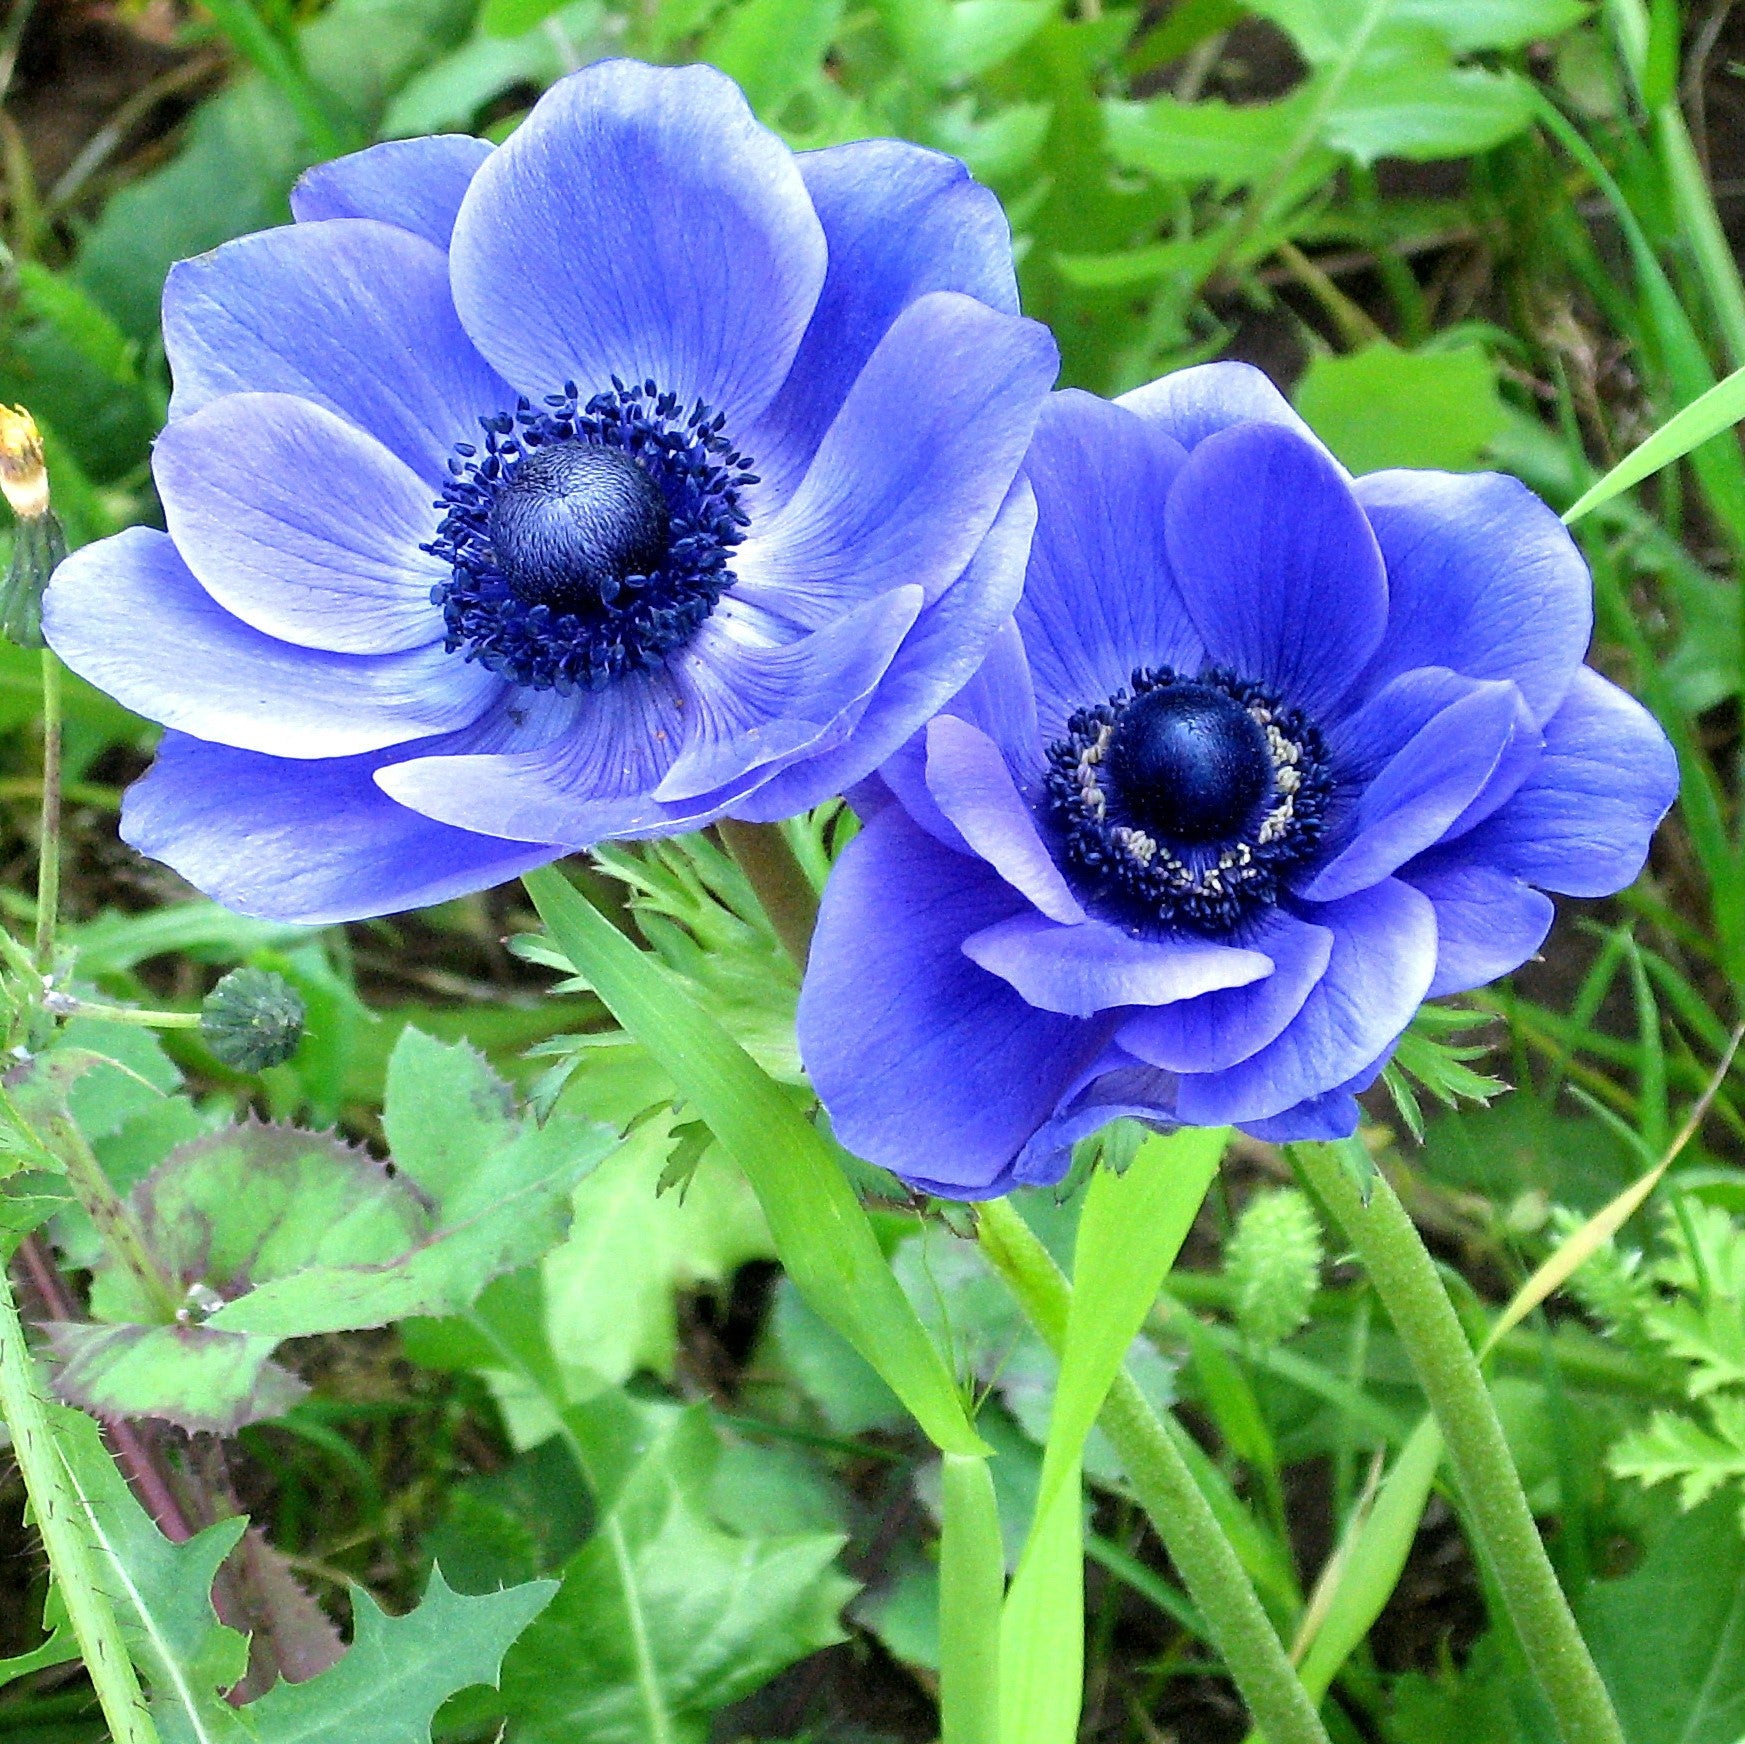 A pair of beautiful "Blue Poppy" Anemones